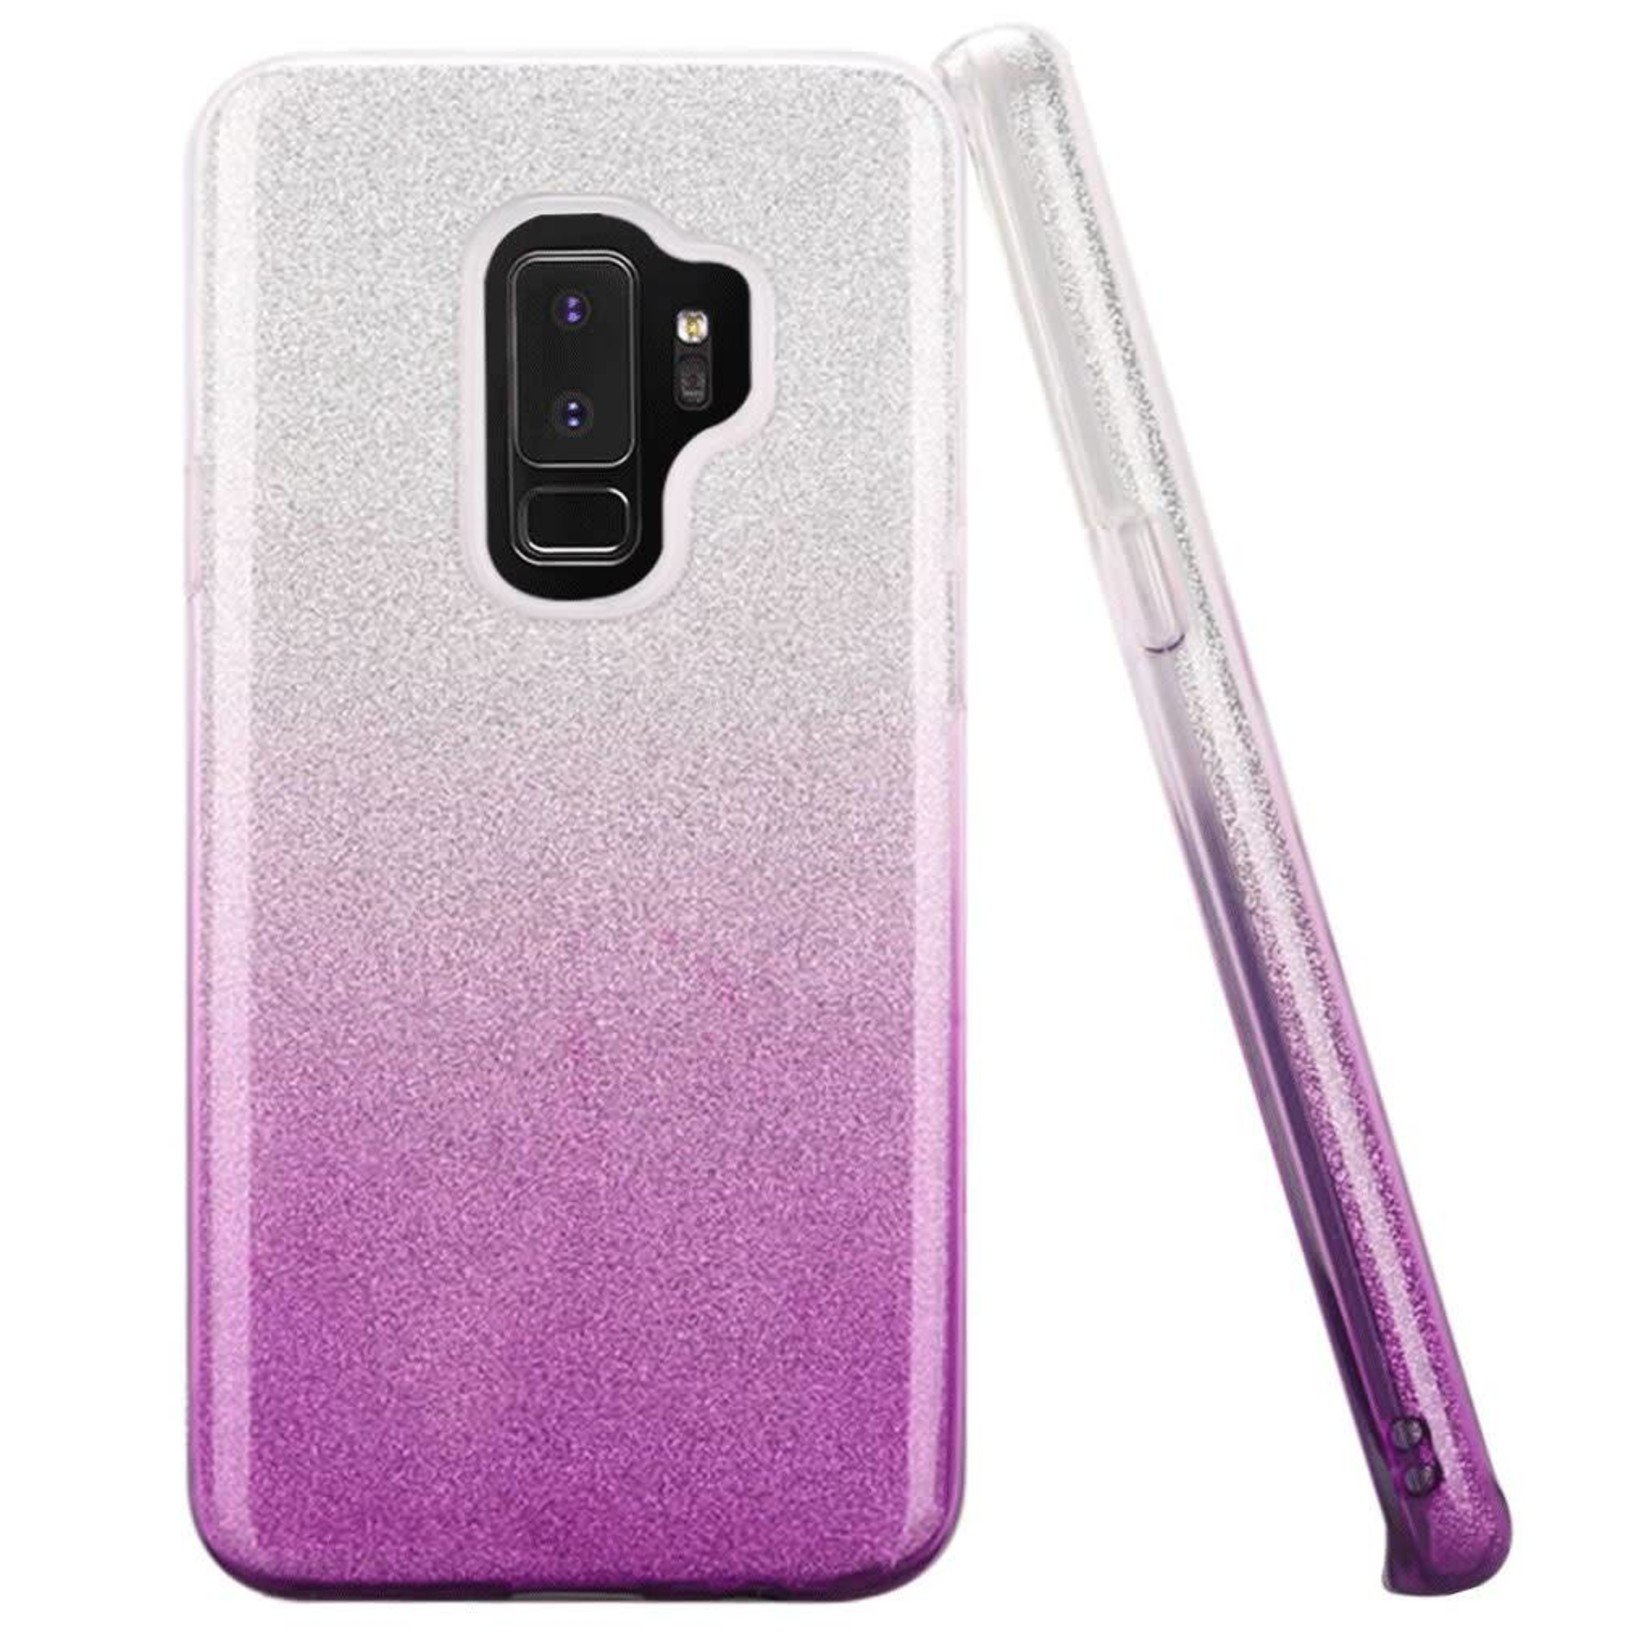 Gradient Two Tone Glitter Paper TPU Gel Case For Galaxy S9 Plus